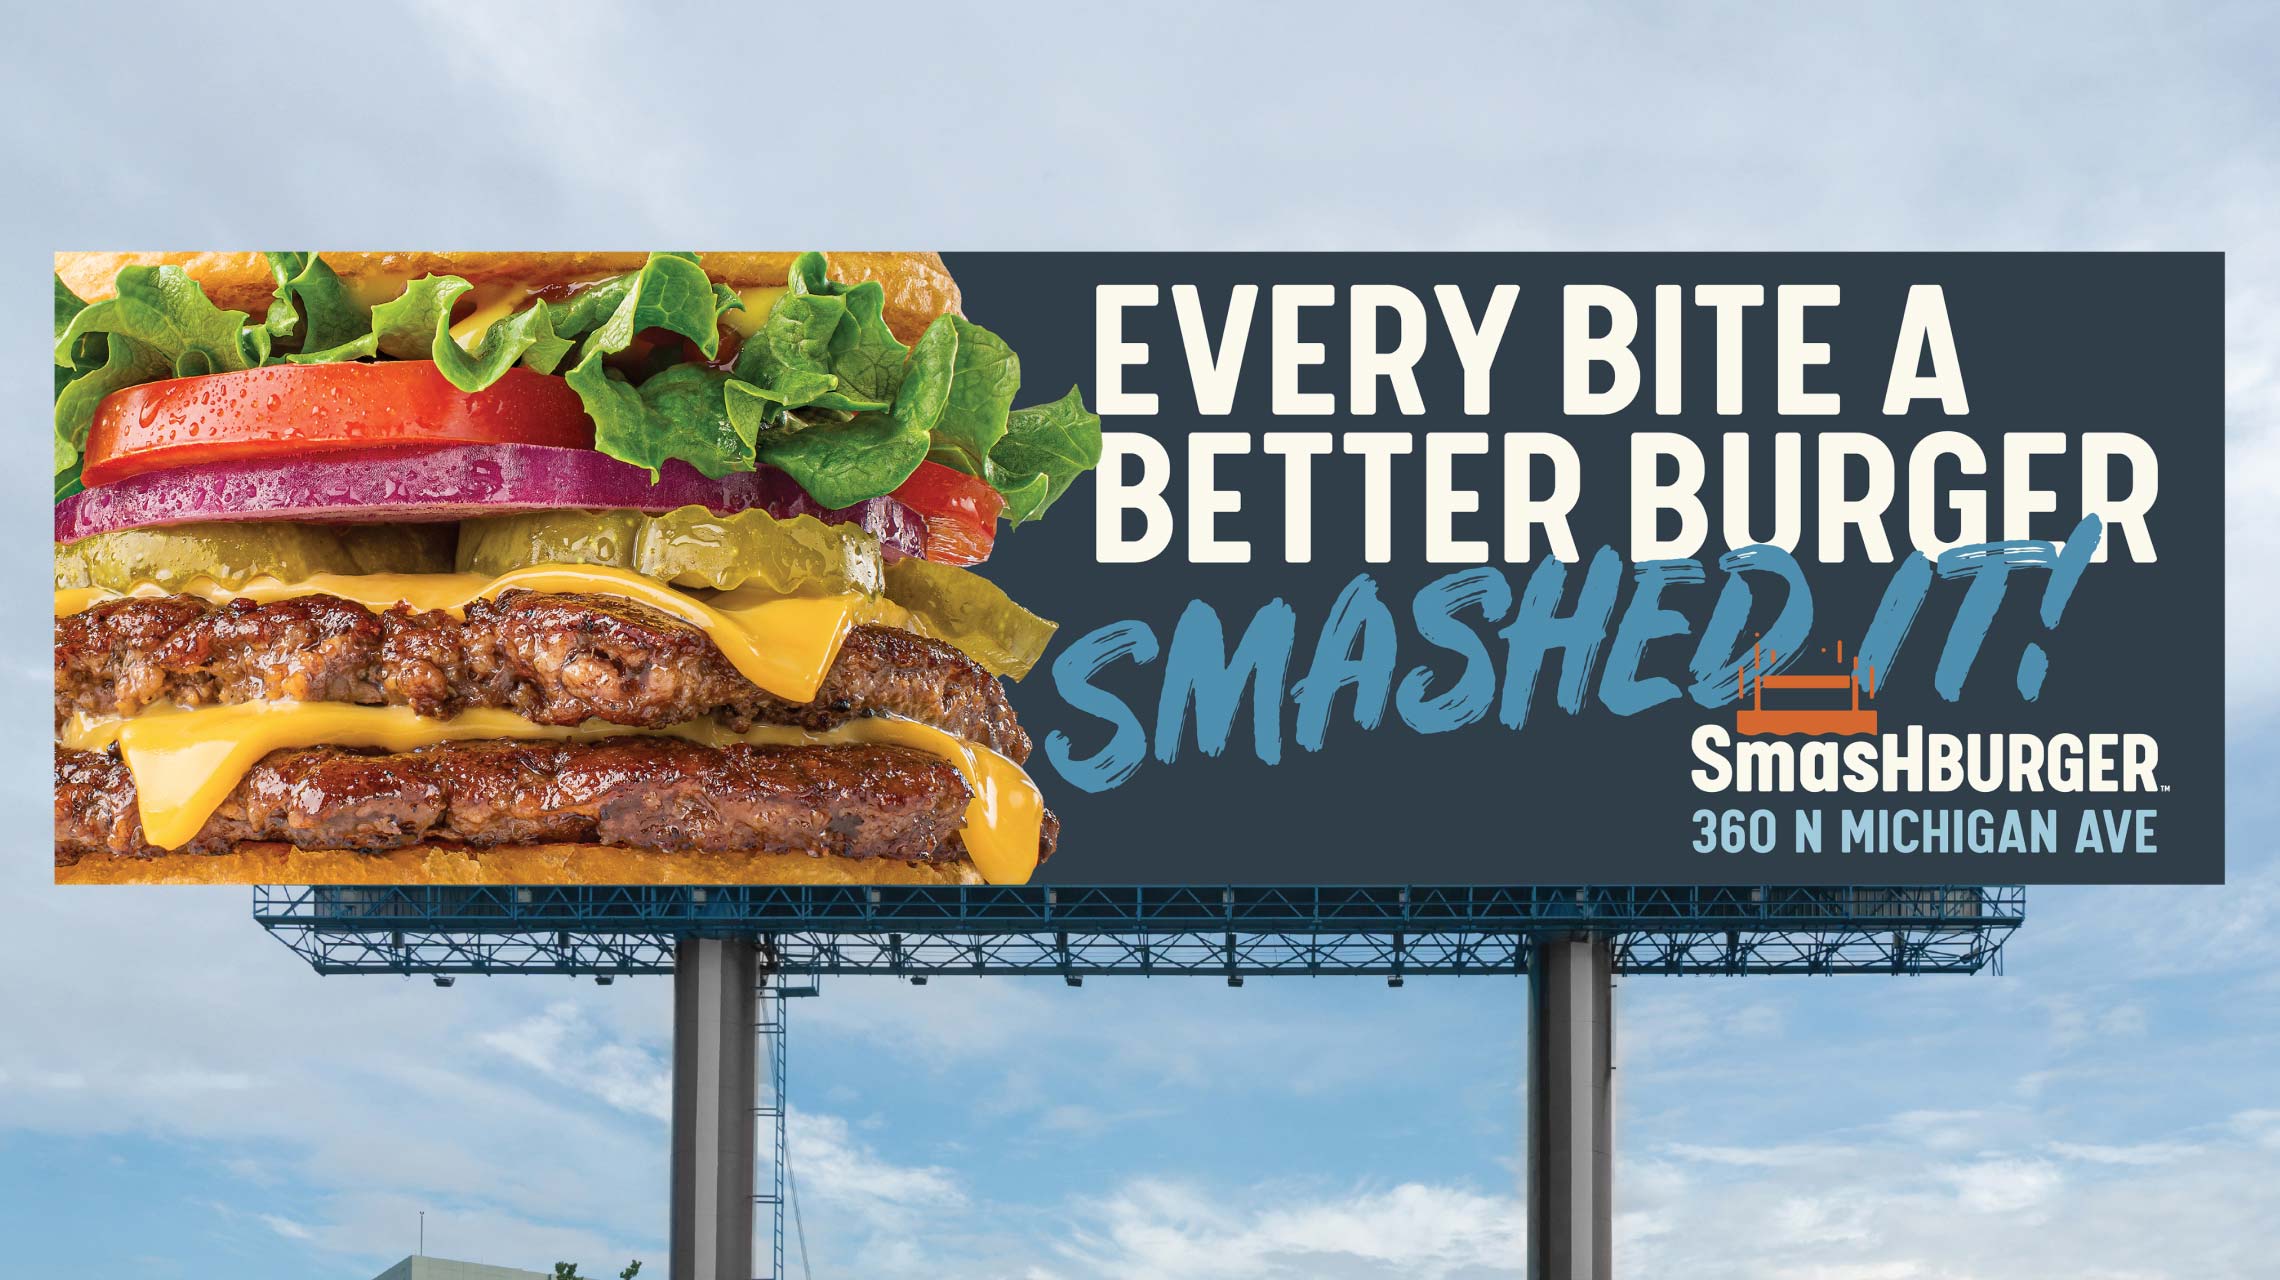 Photograph of a Smashburger billboard - "Every bite a better burger!"